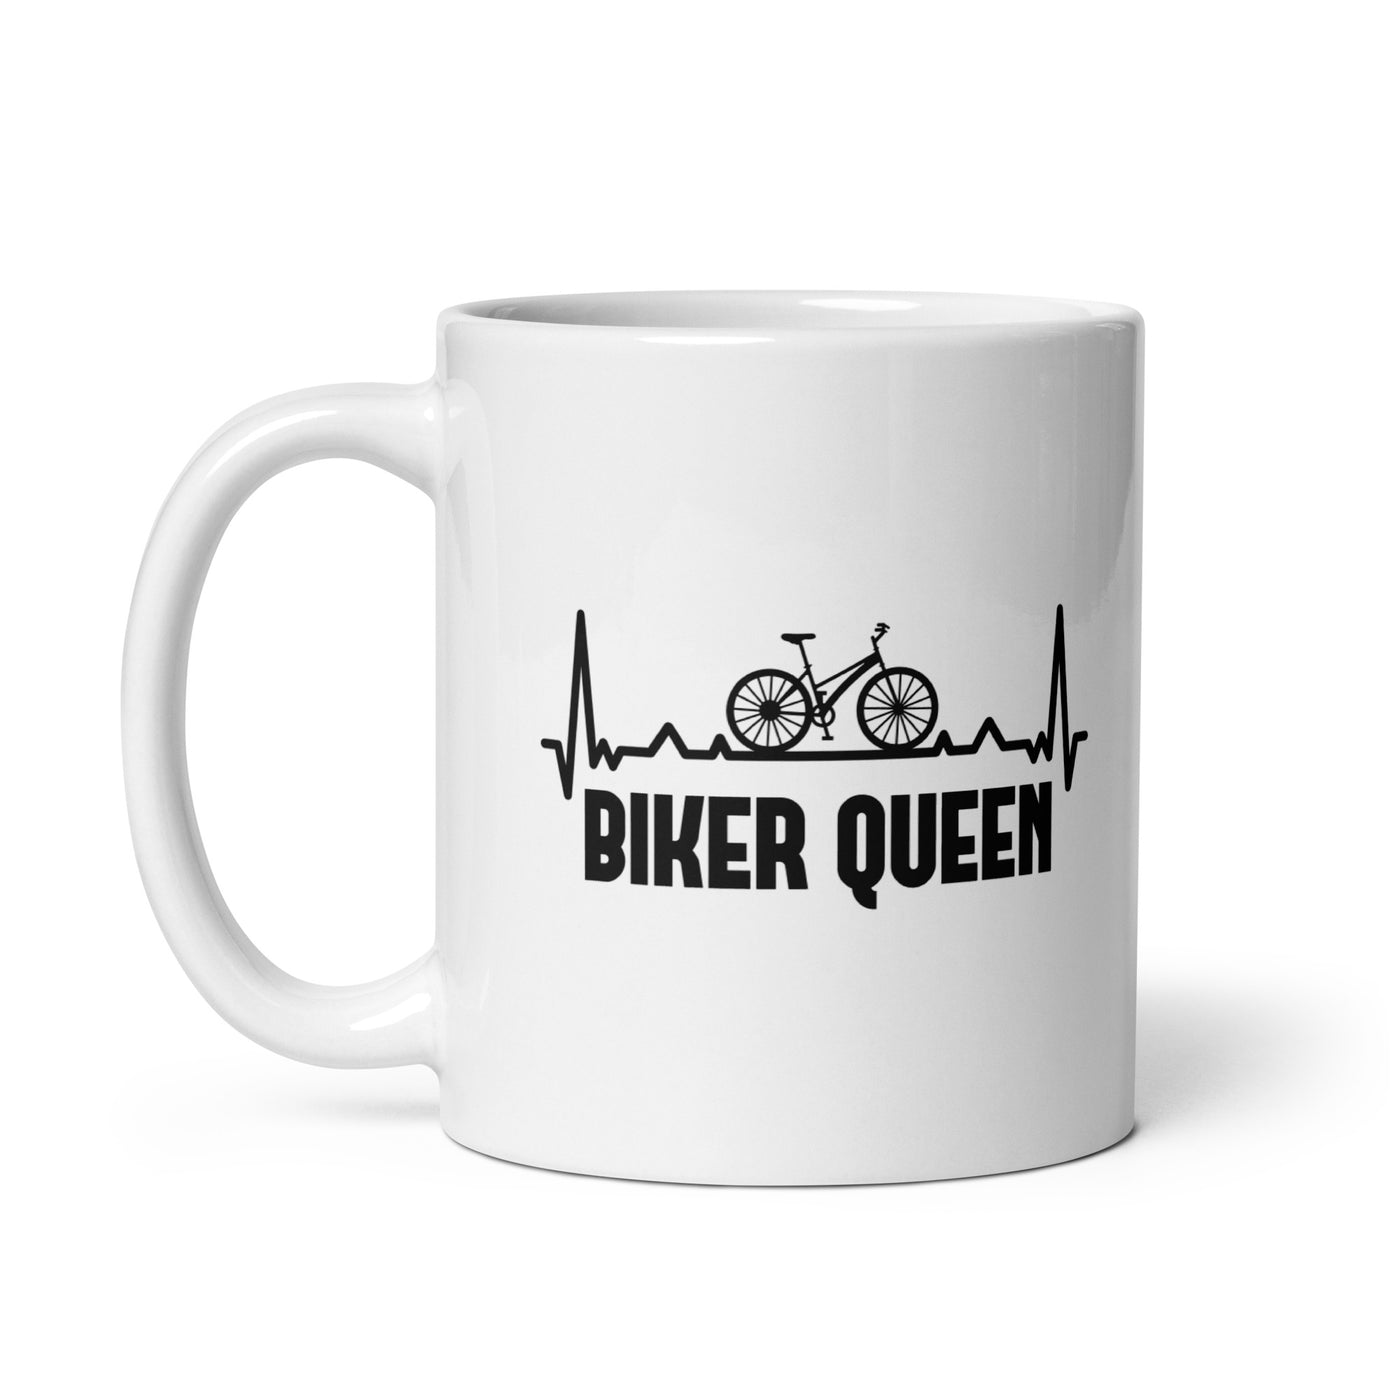 Biker Queen 1 - Tasse fahrrad 11oz